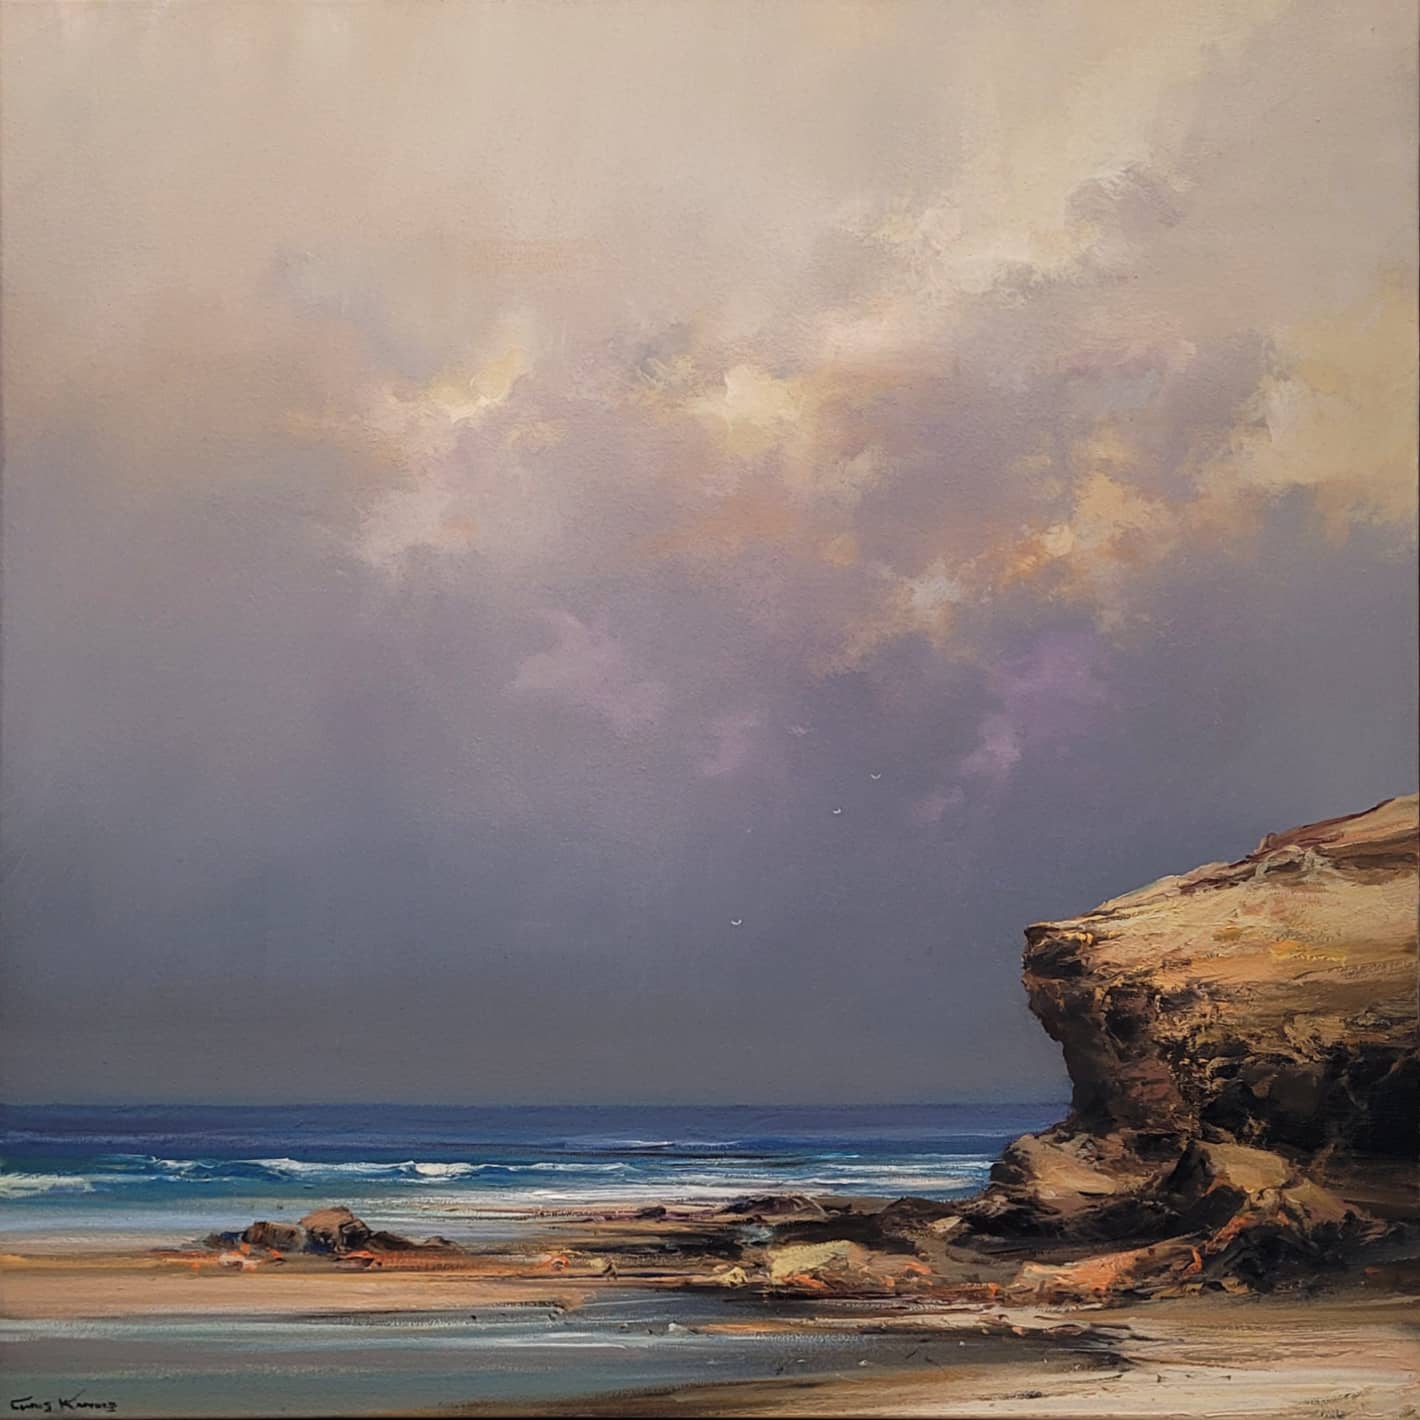 Chris Kandis Painting ~ 'Sorrento Back Beach' - Curate Art & Design Gallery Sorrento Mornington Peninsula Melbourne